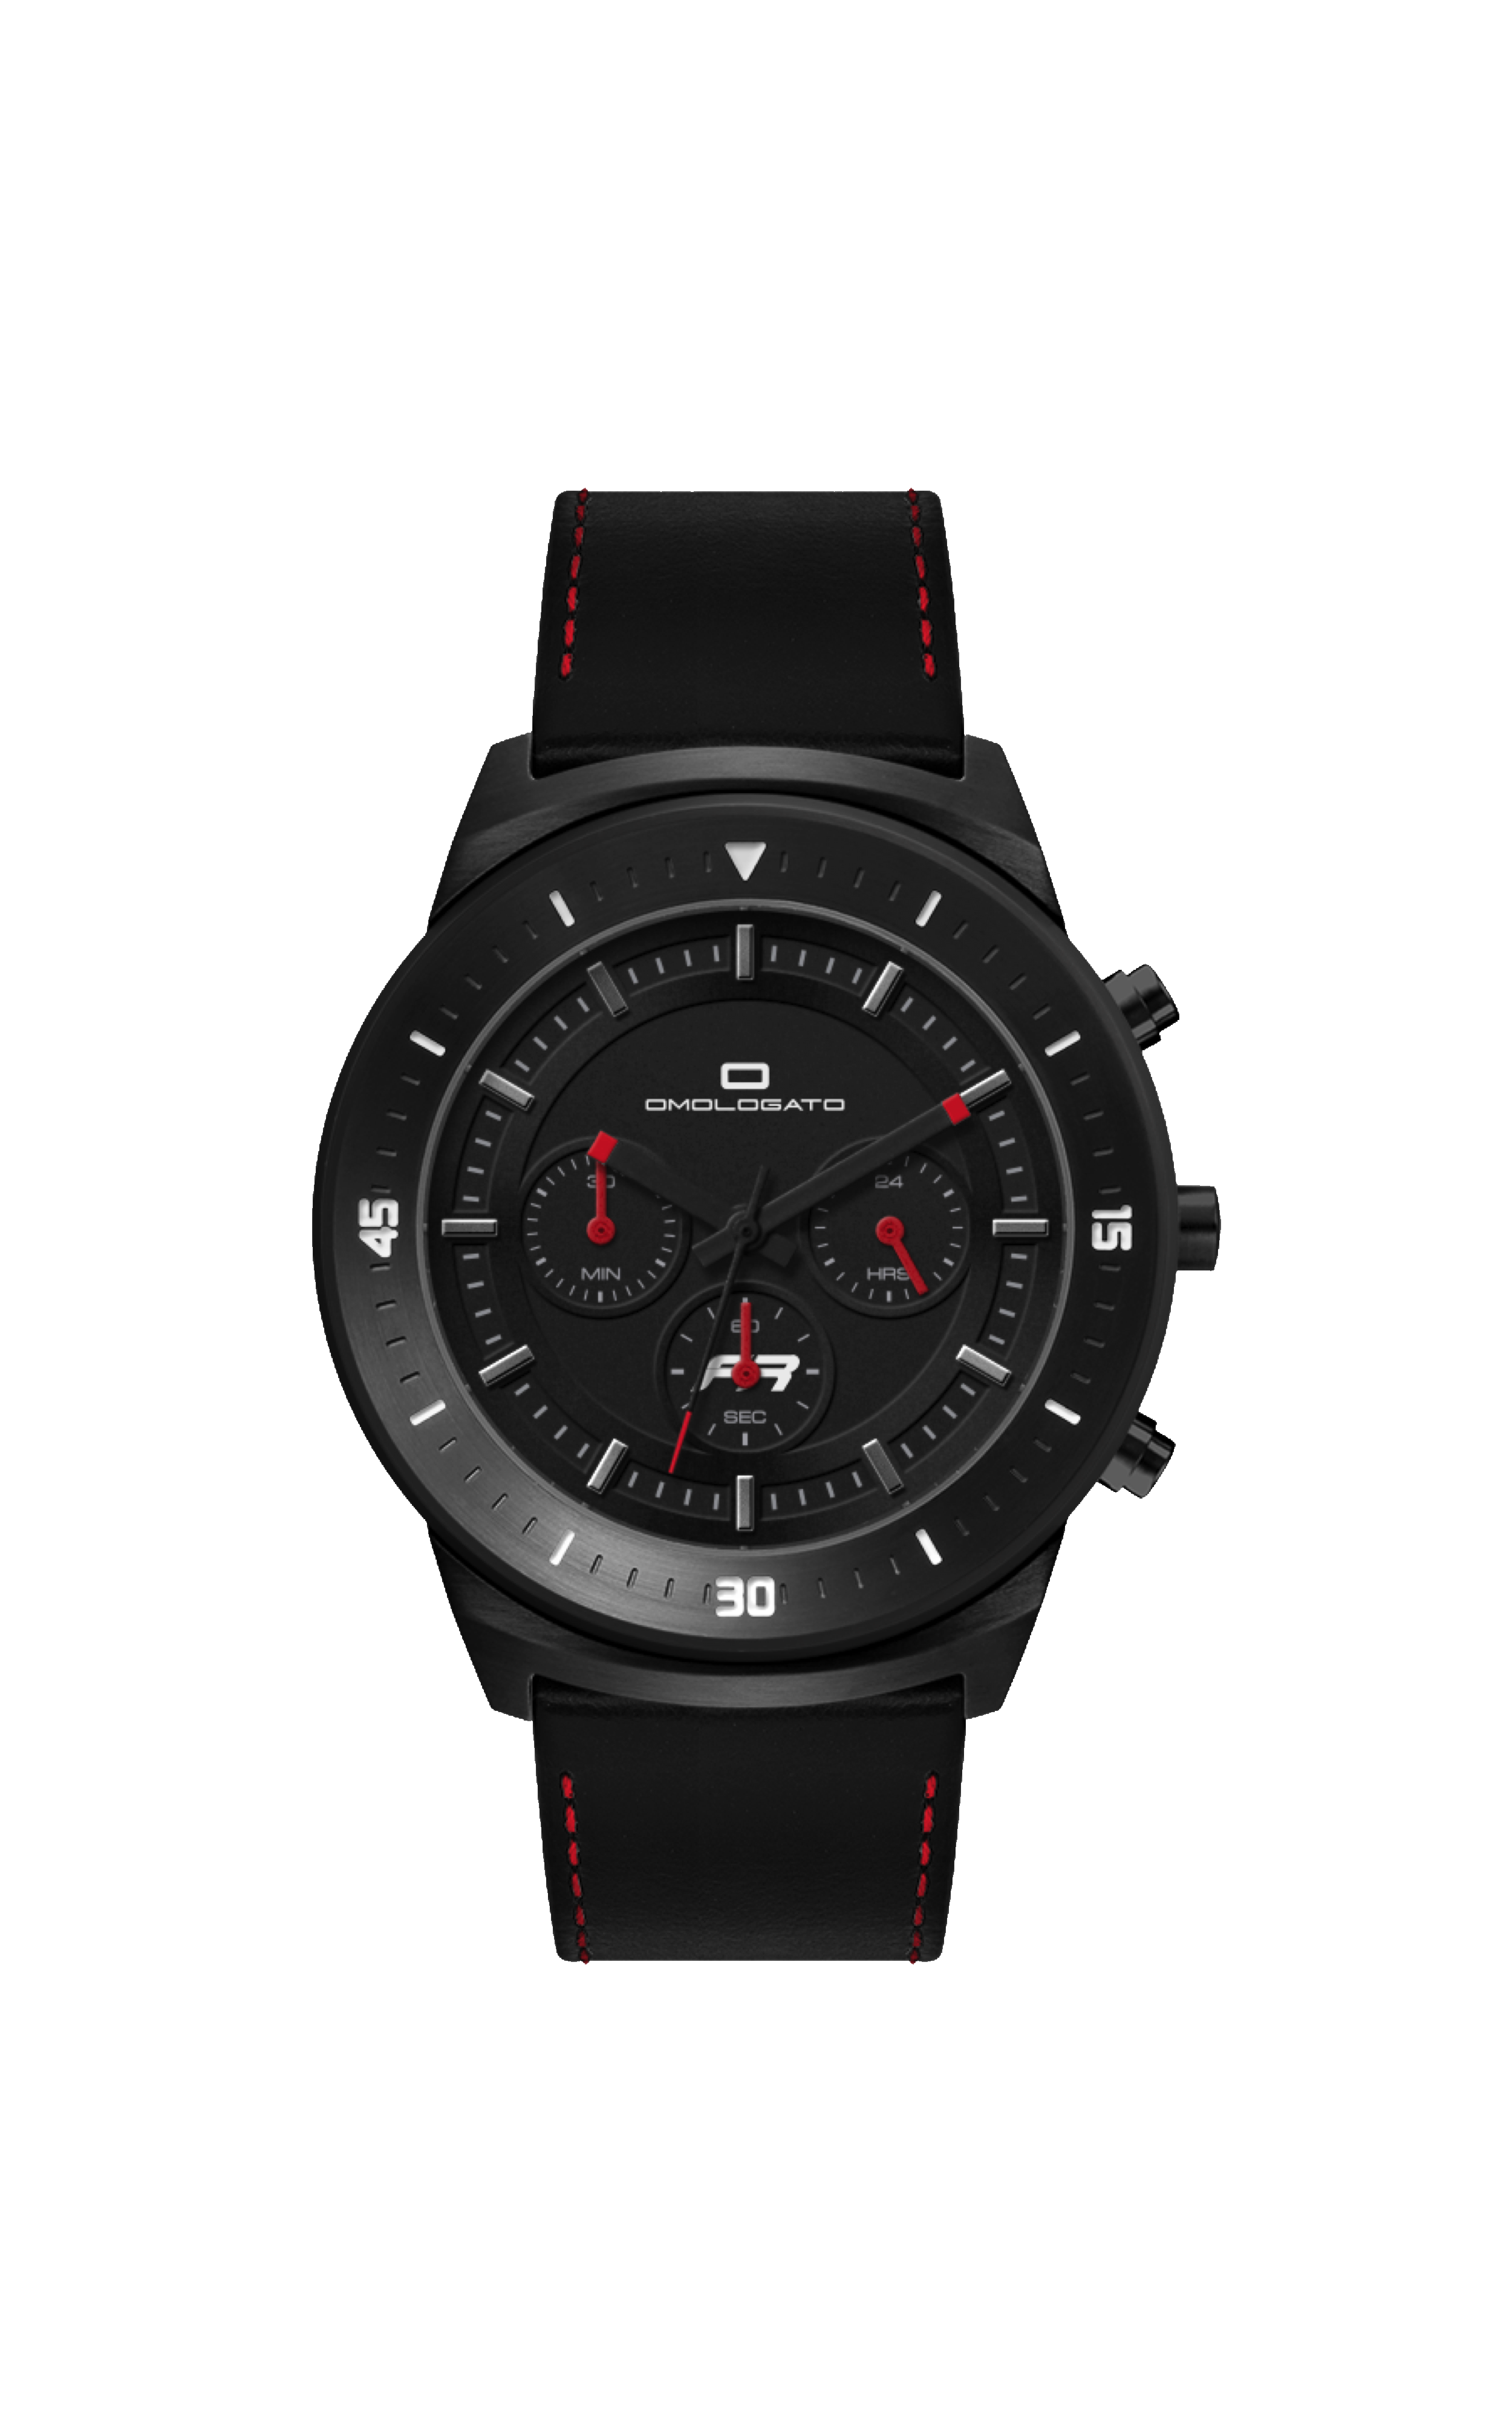 F4 chronograph watch